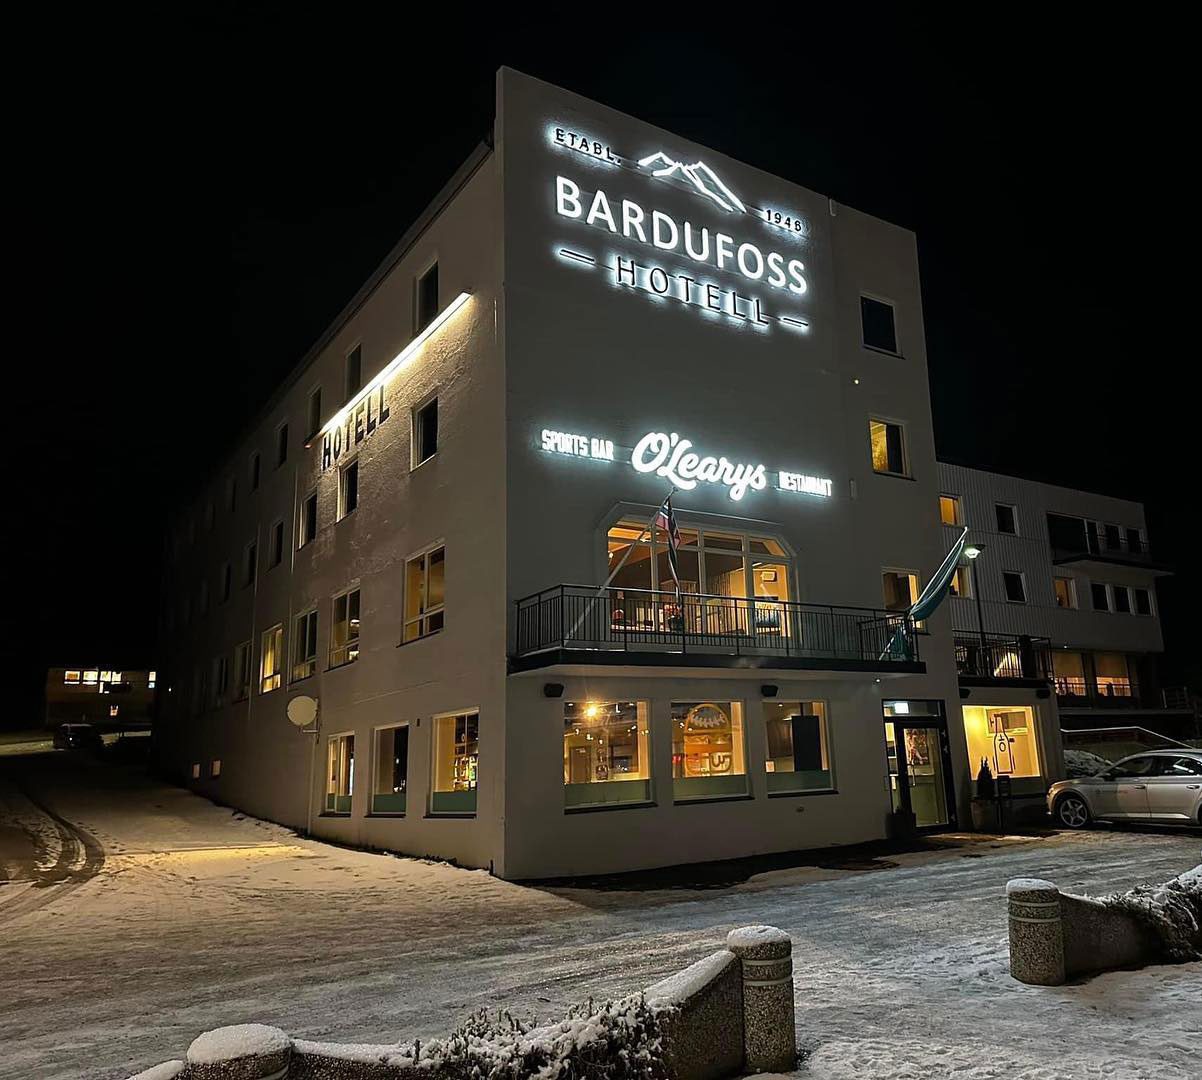 Bardufoss hotel